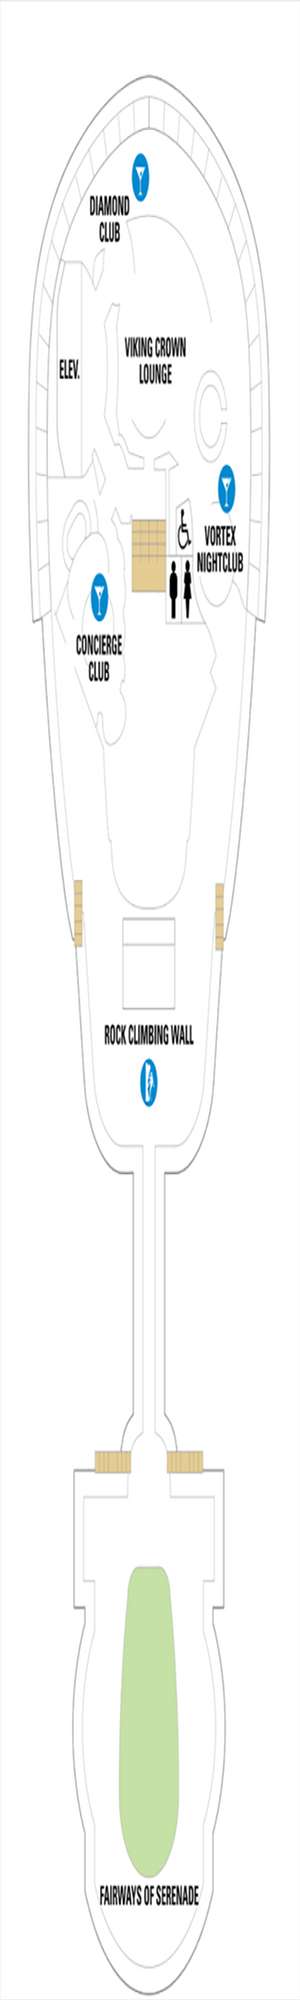 Deck plan for Serenade of the Seas